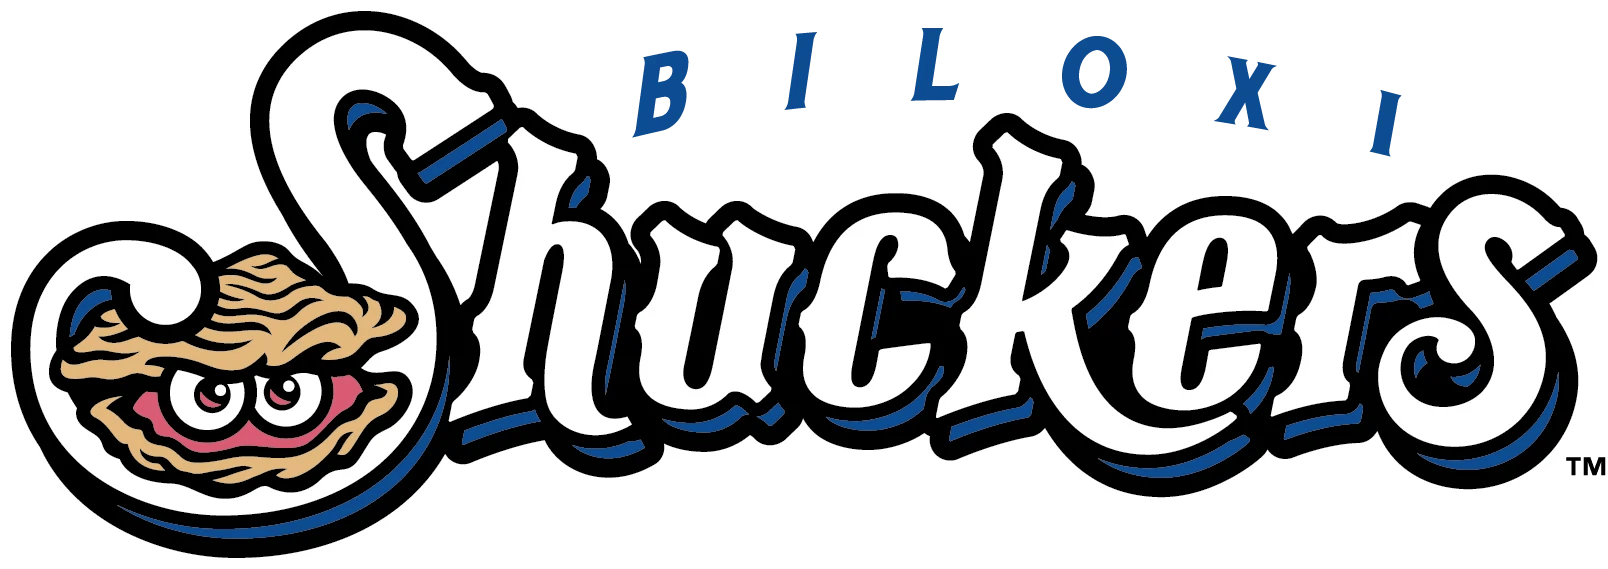 Biloxi Shuckers logo